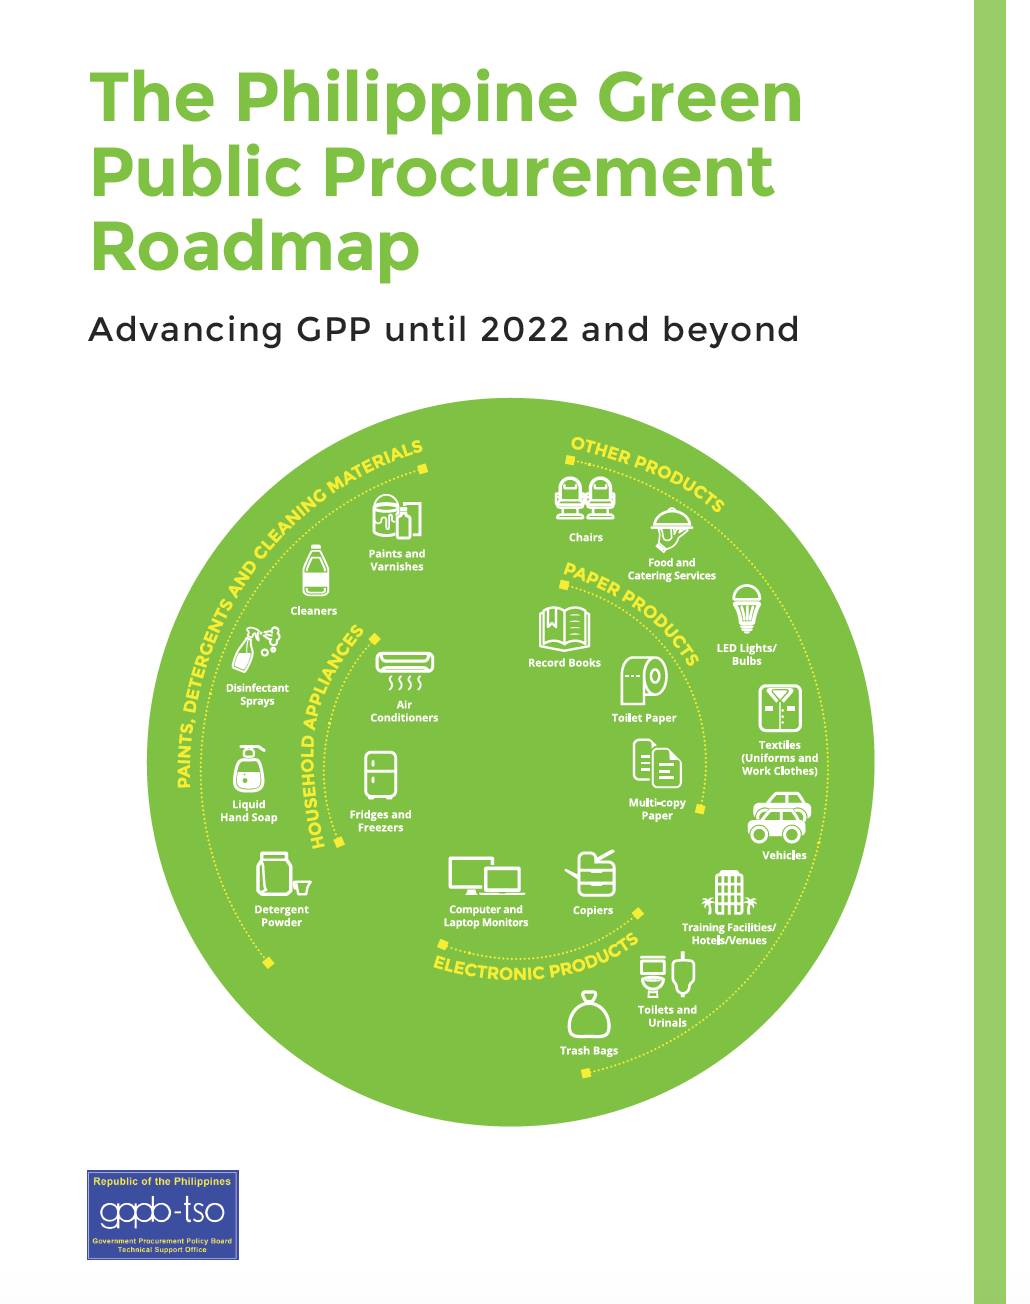 The Philippine Green Public Procurement Roadmap